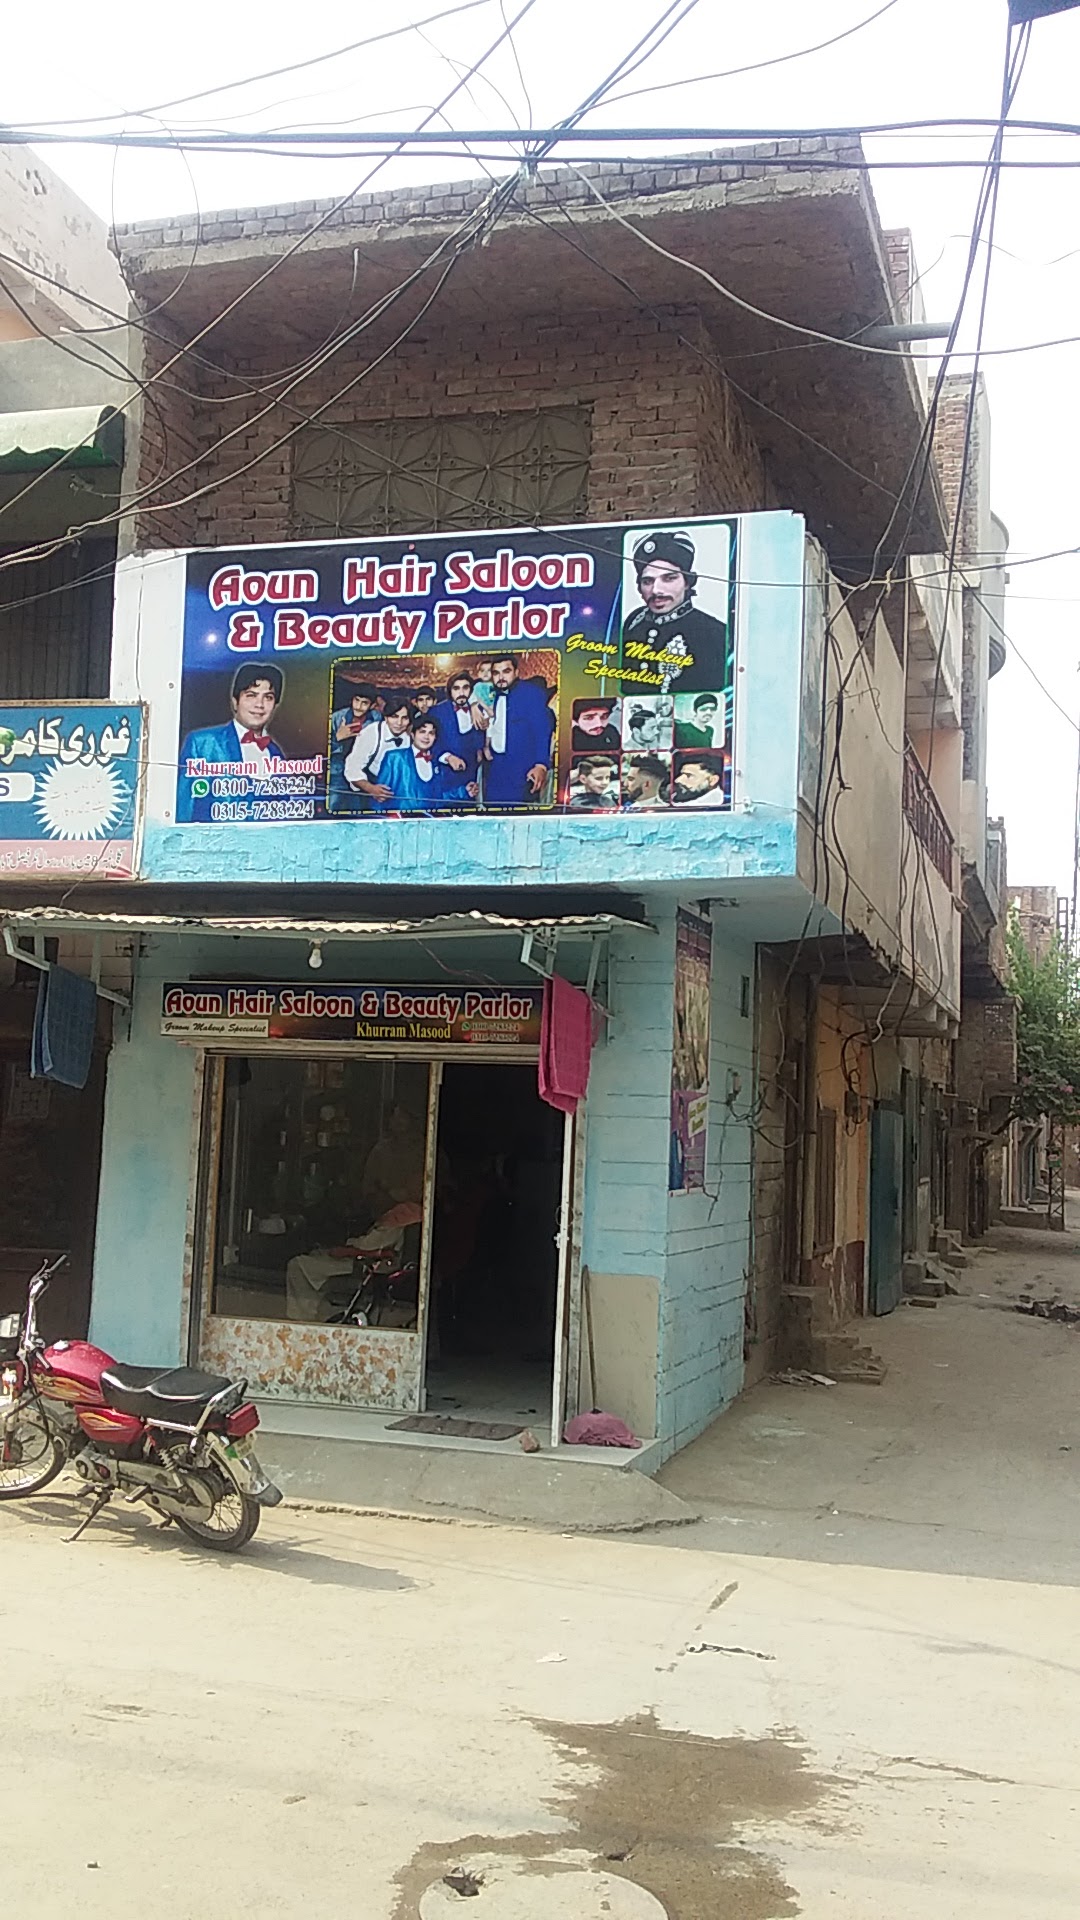 Aoun hair saloon and beauty parlor